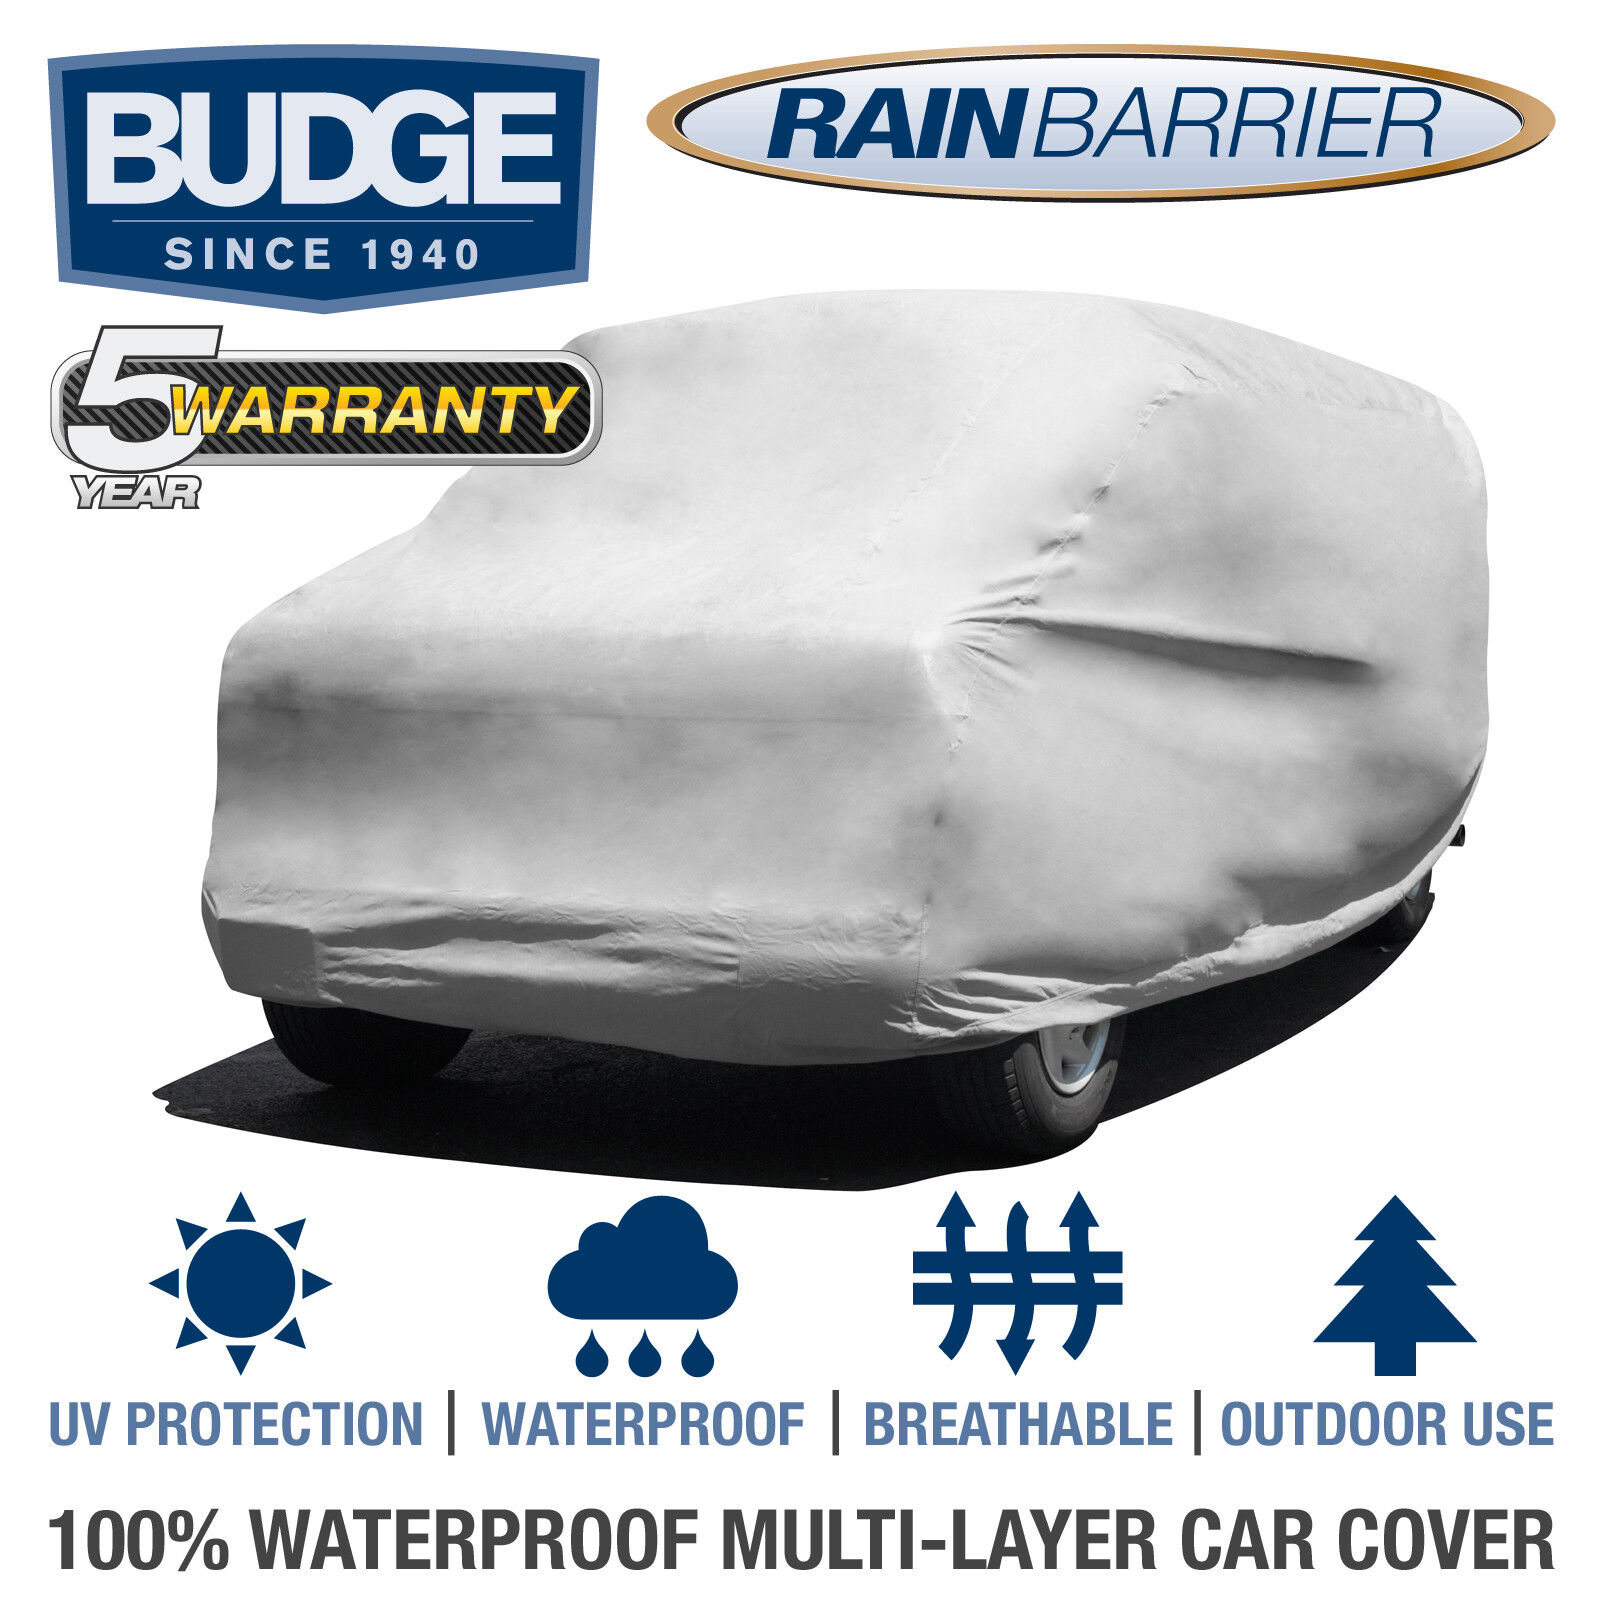 Budge Rain Barrier Van Cover Fits Mini-Vans up to 18' Long|Waterproof|Breathable